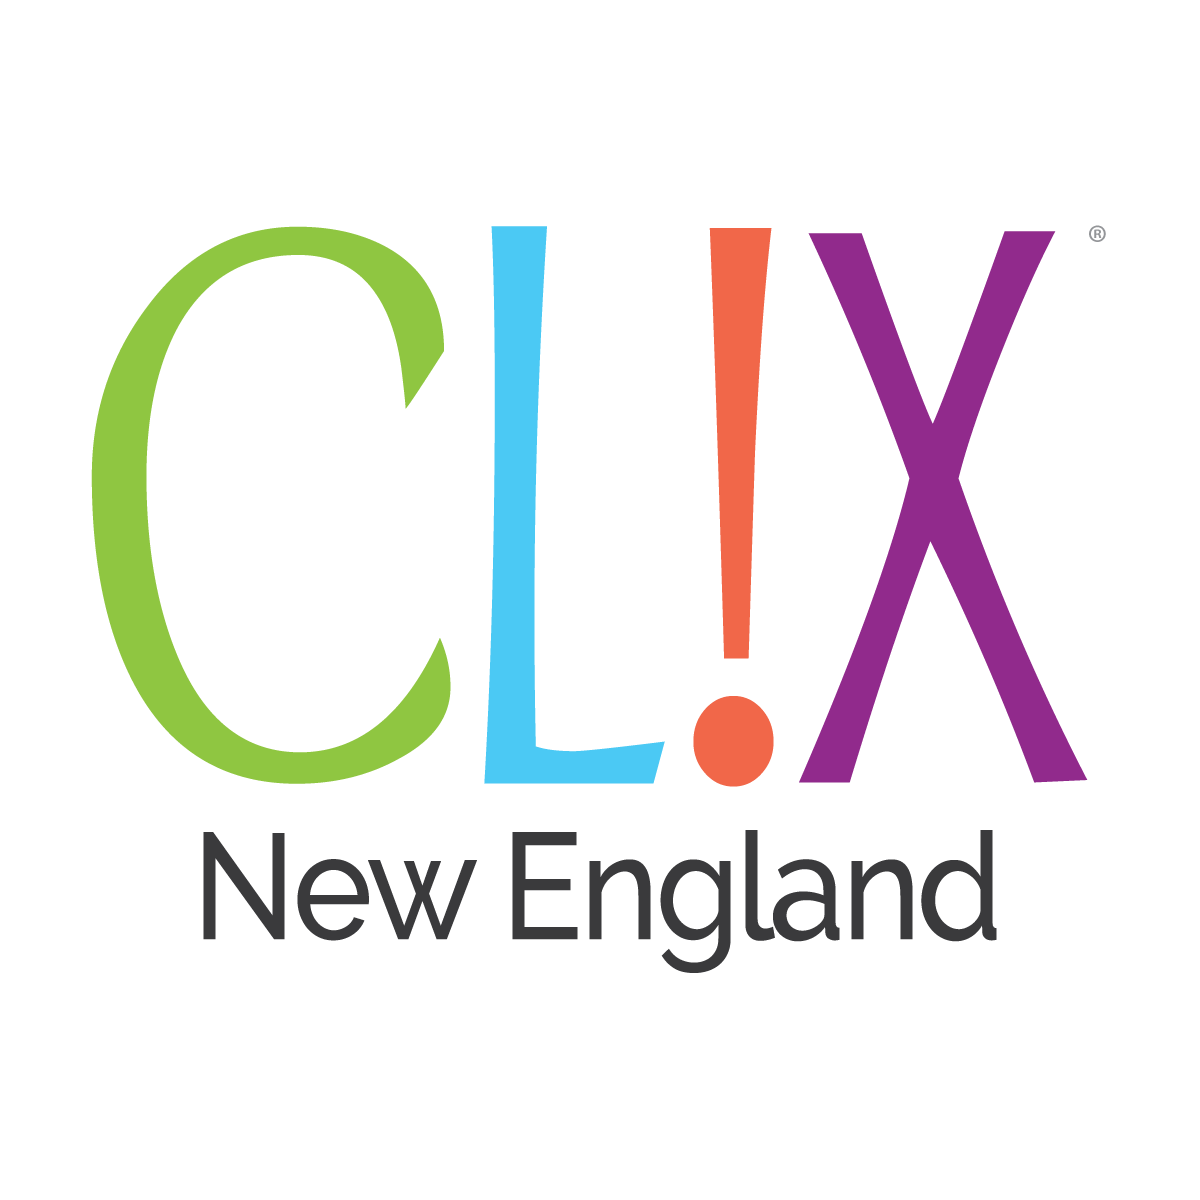 Clix New England